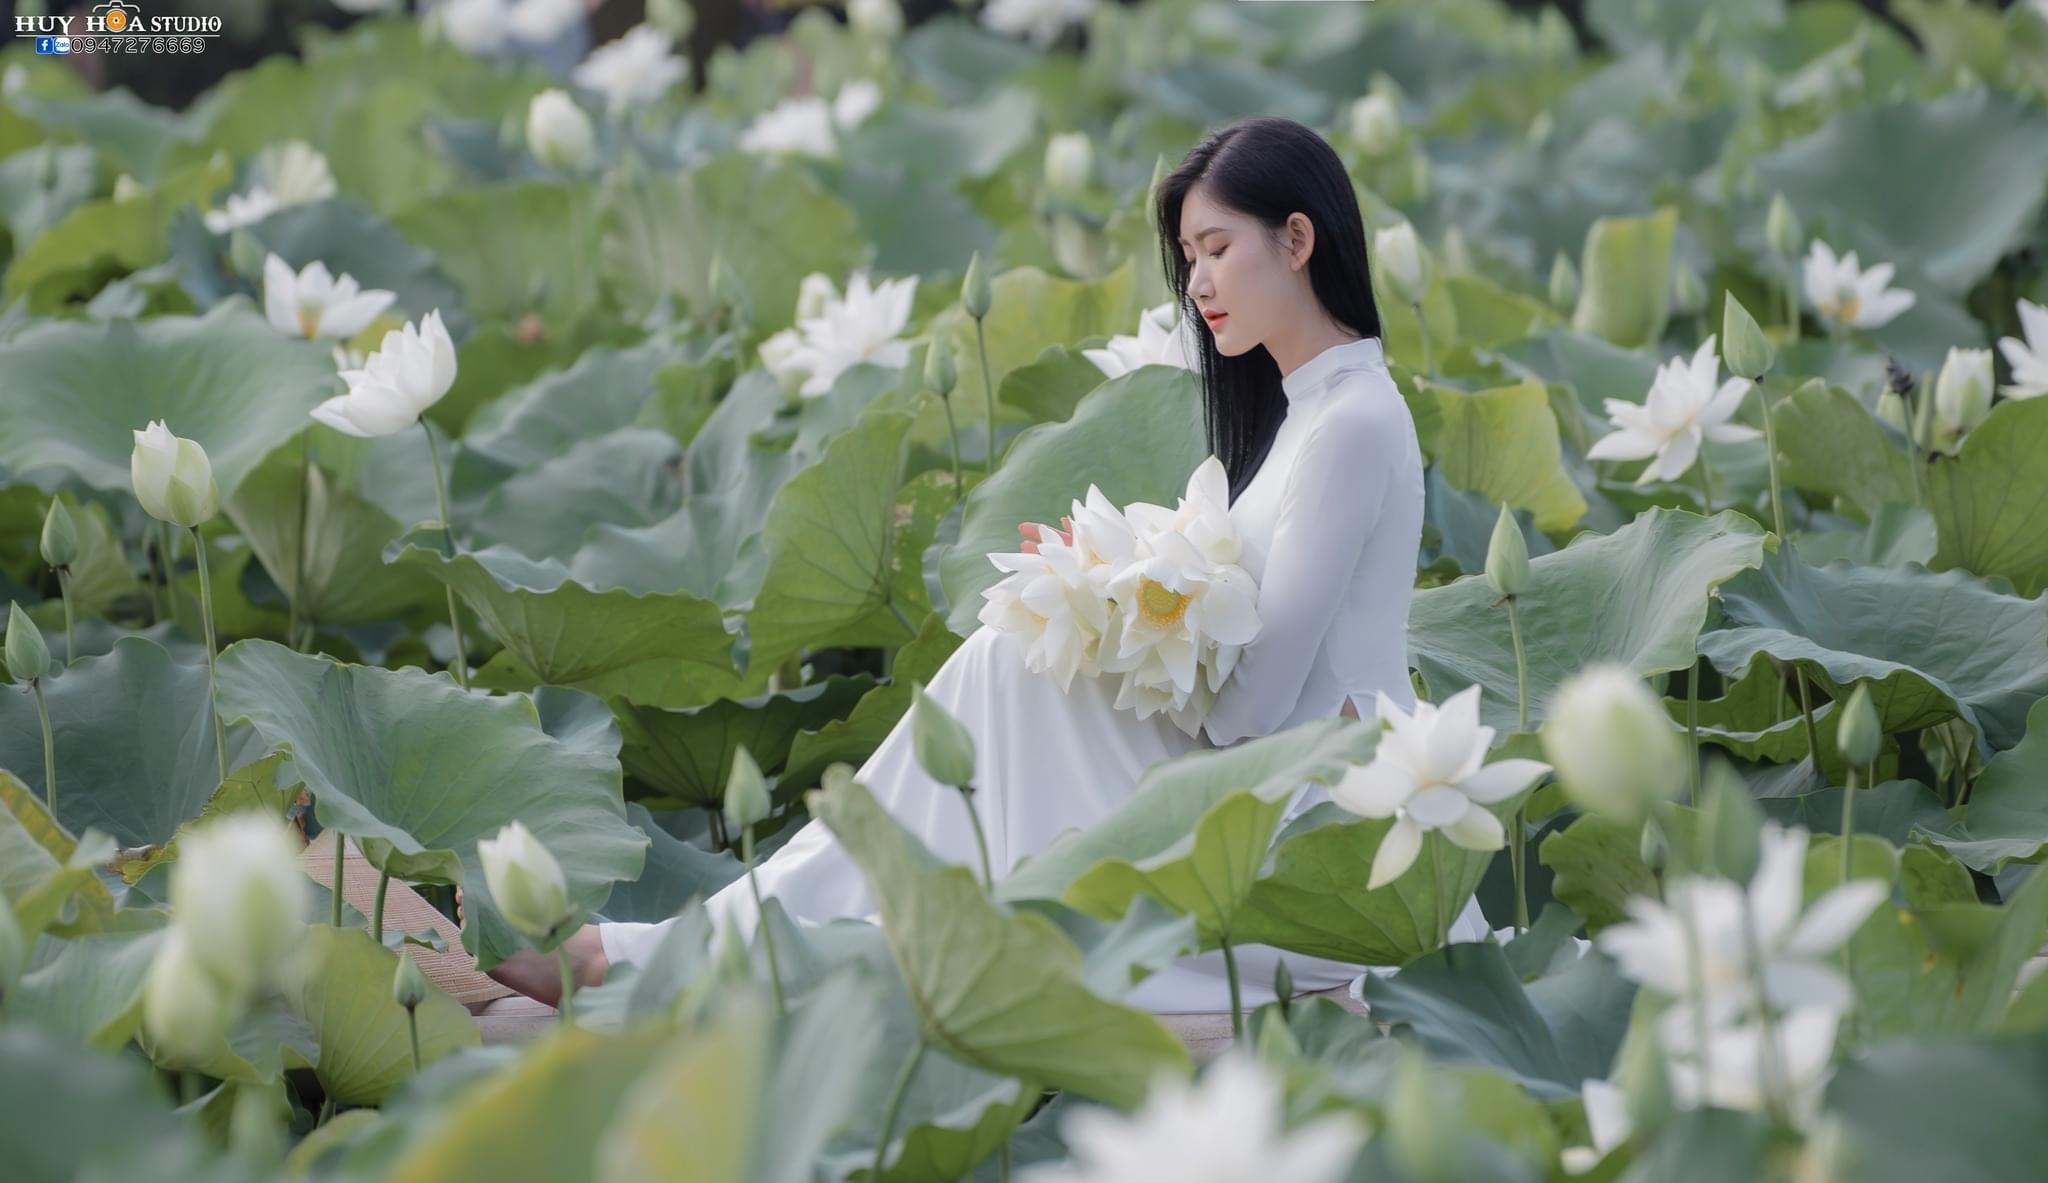 Aodai and white lotus